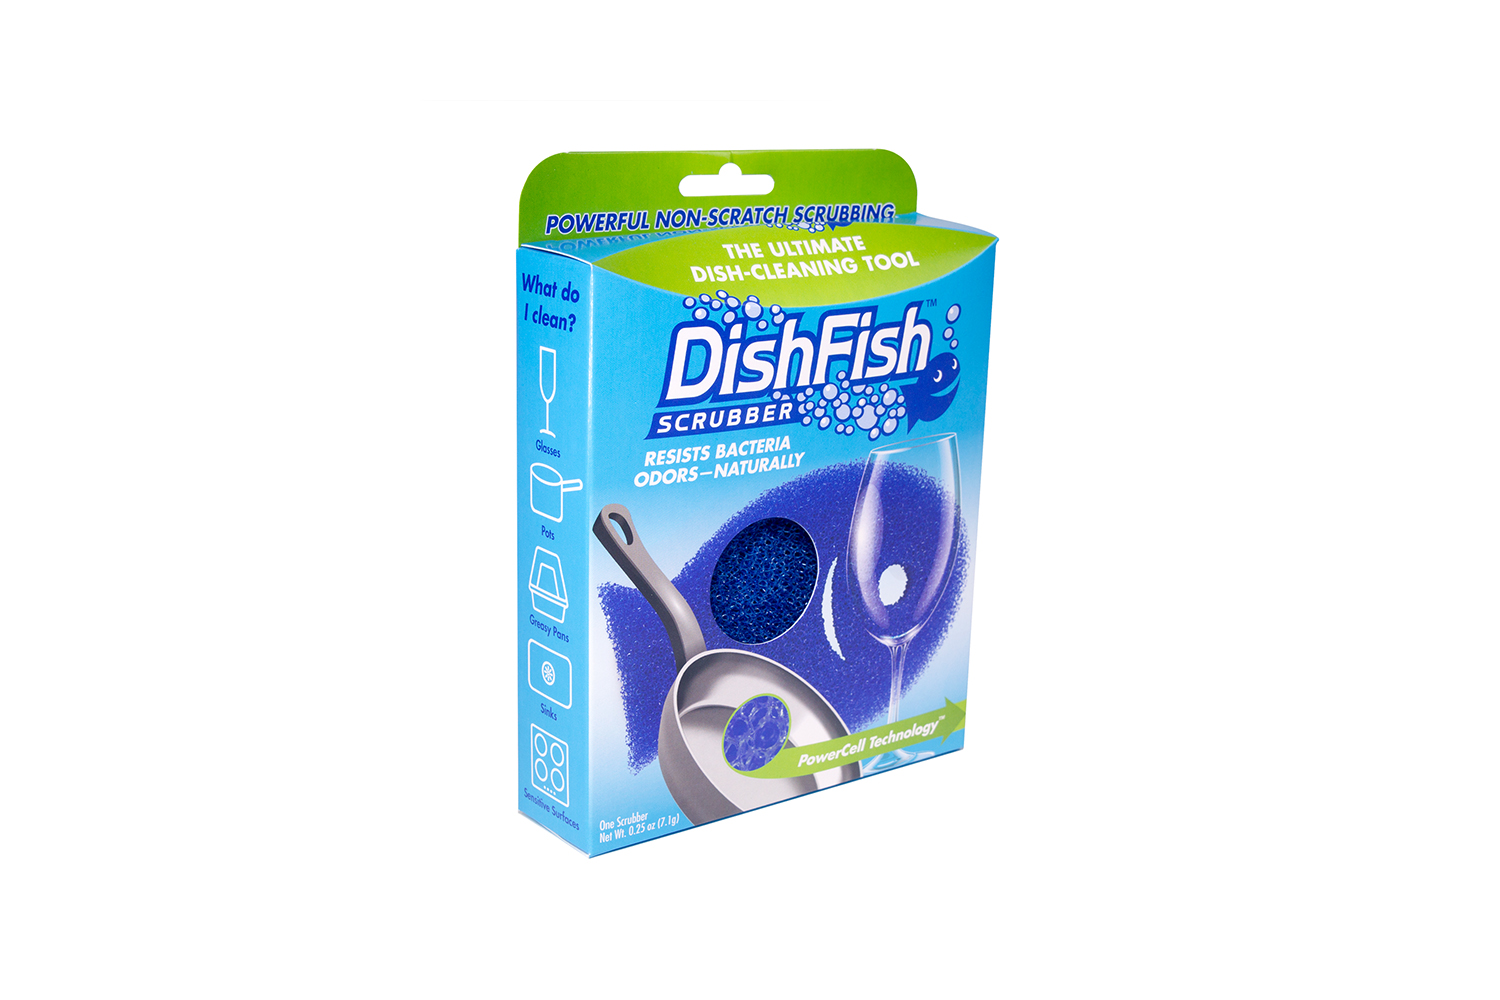 dishfish-scrubber-1pk-left-side-1500px.jpg